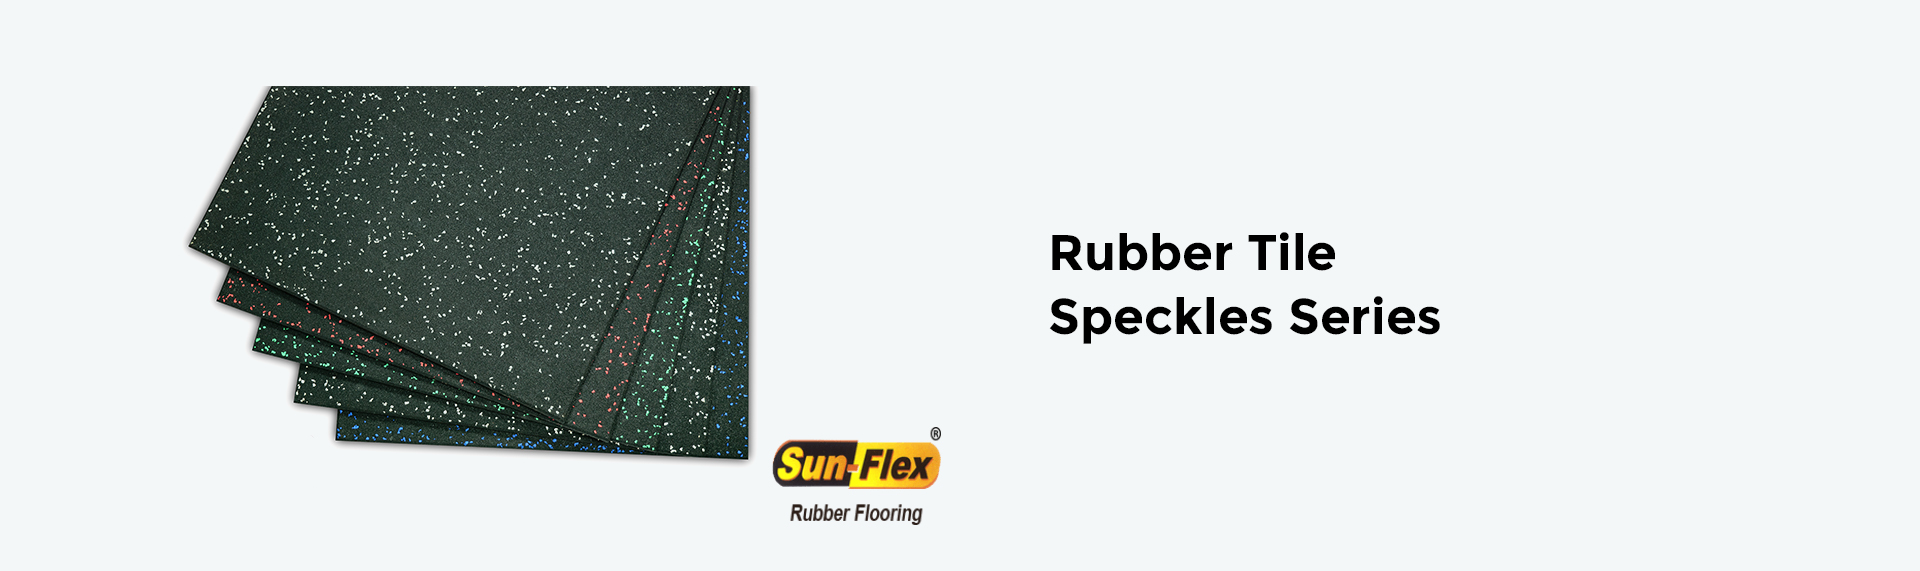 1-Rubber-Tile-Speckles-Series